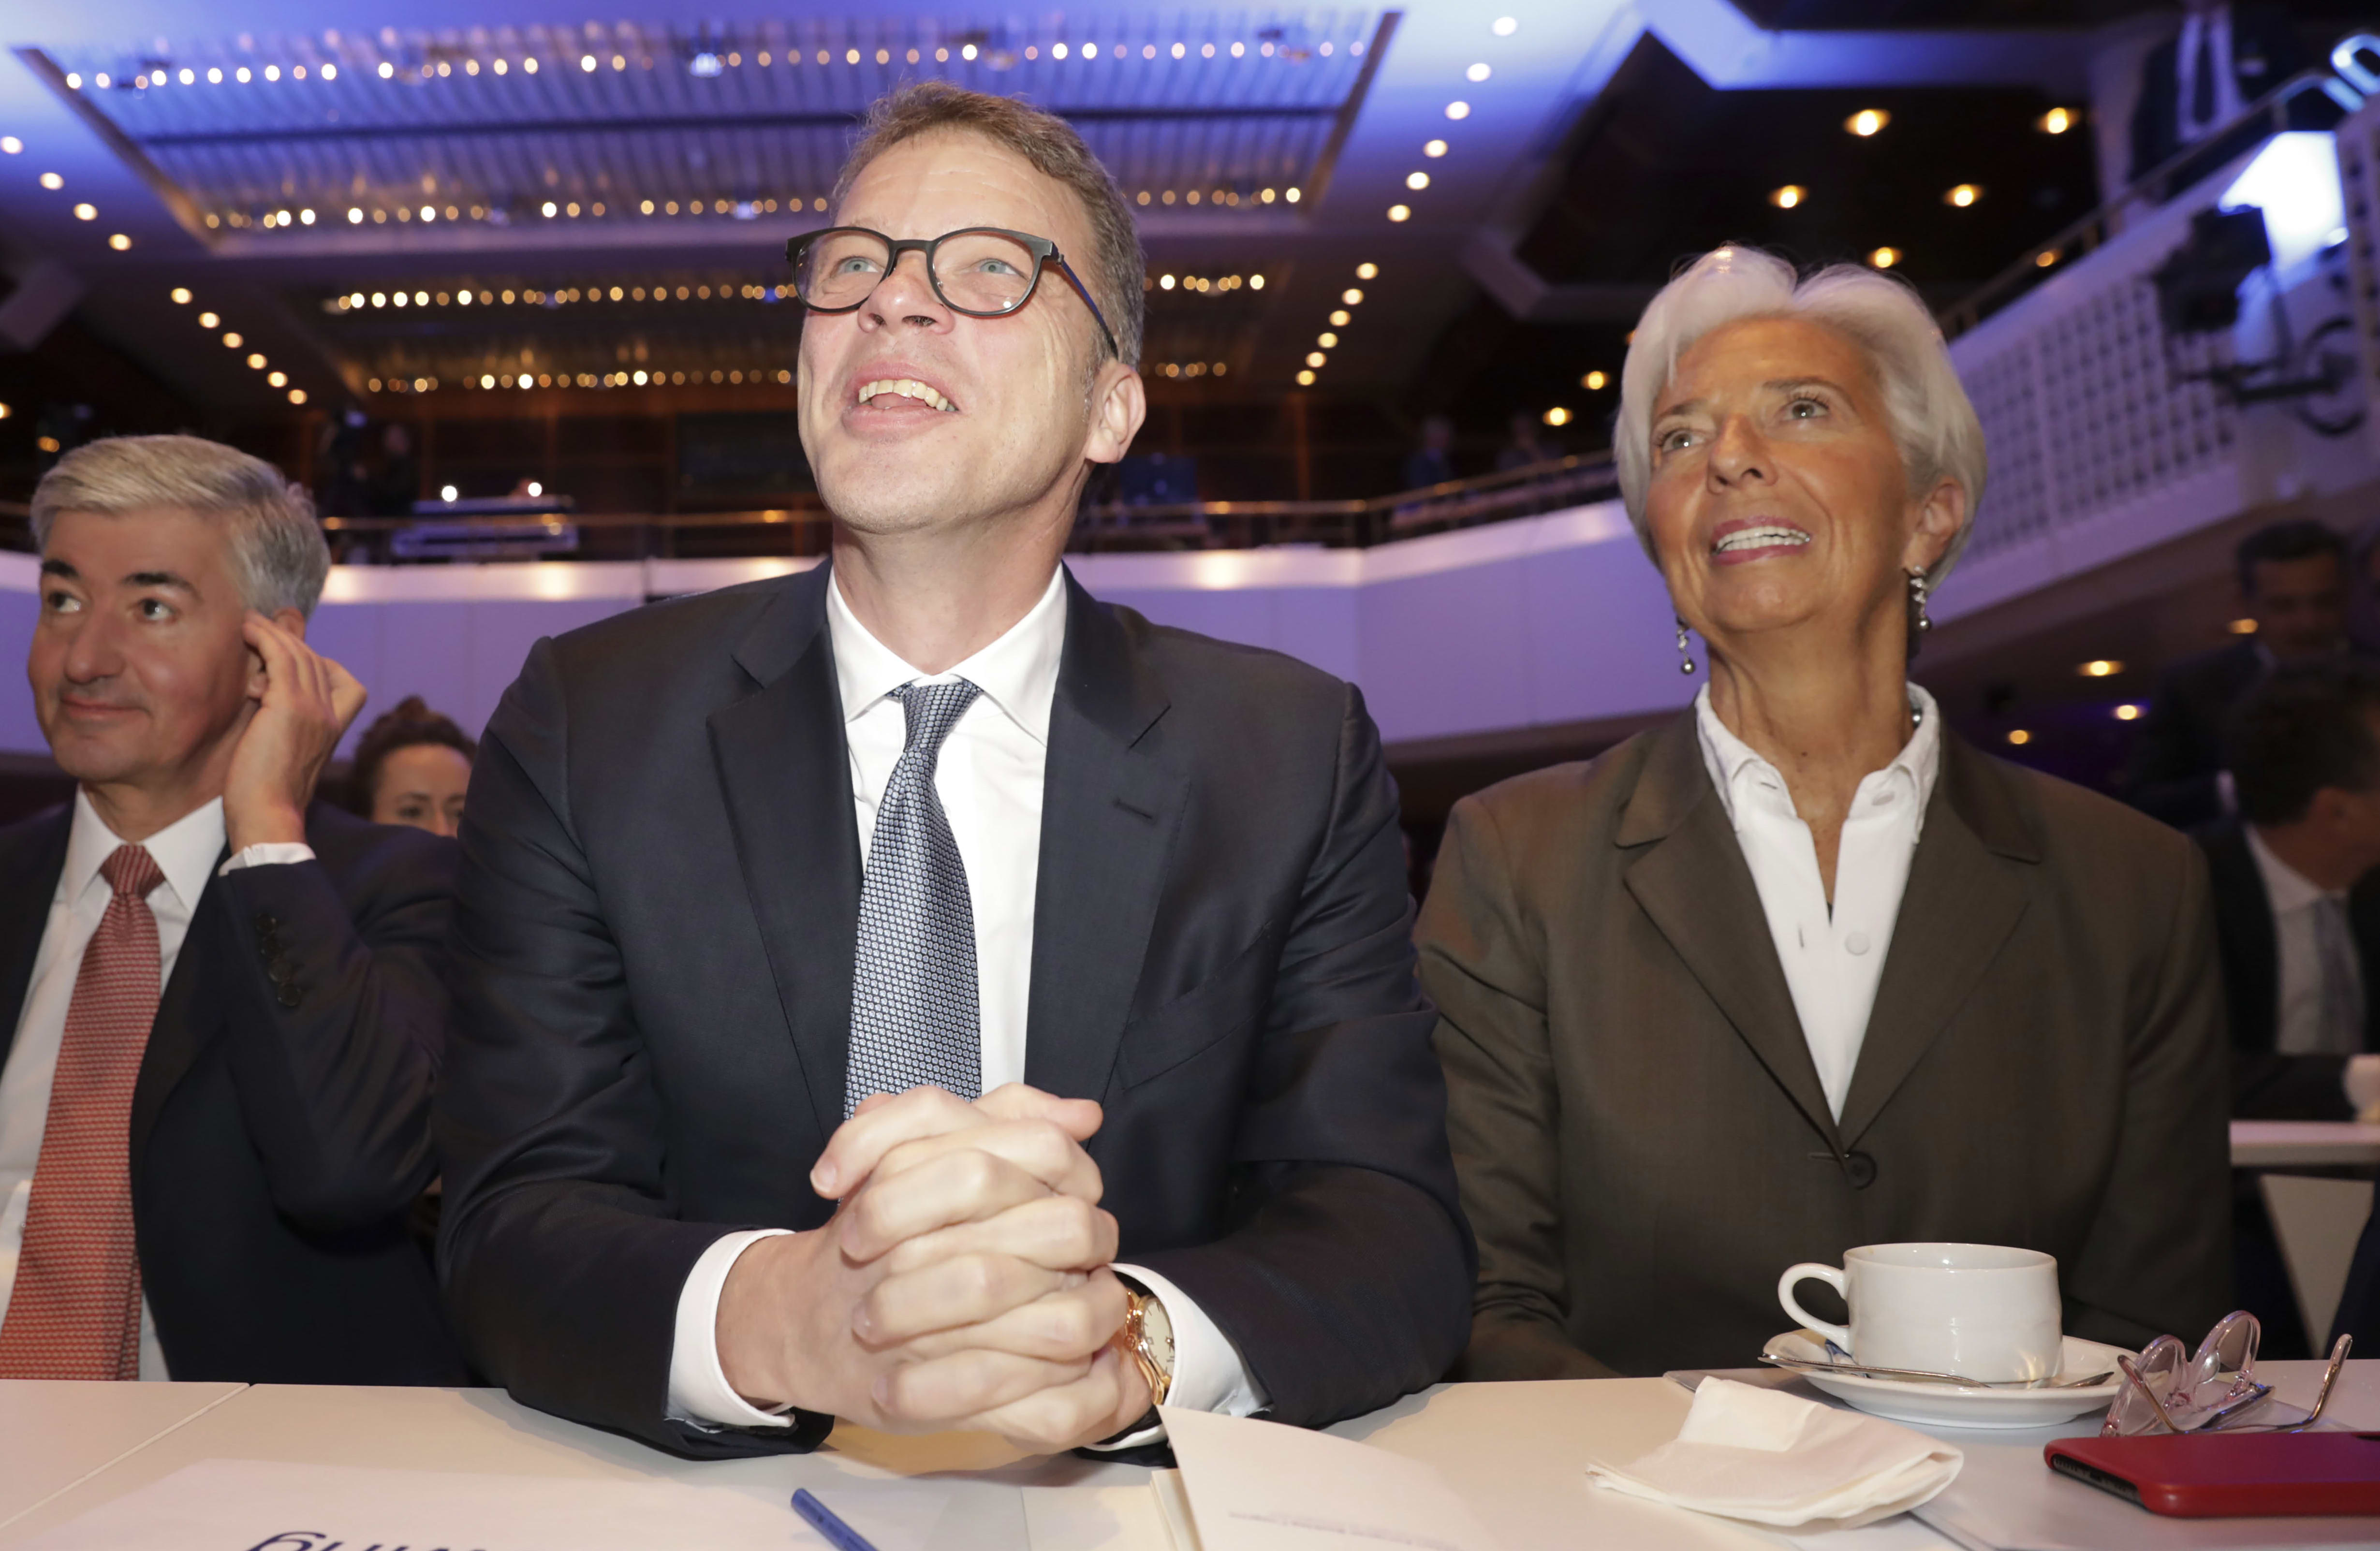 Deutsche Bank CEO backs Lagarde's vision for euro zone fiscal stimulus